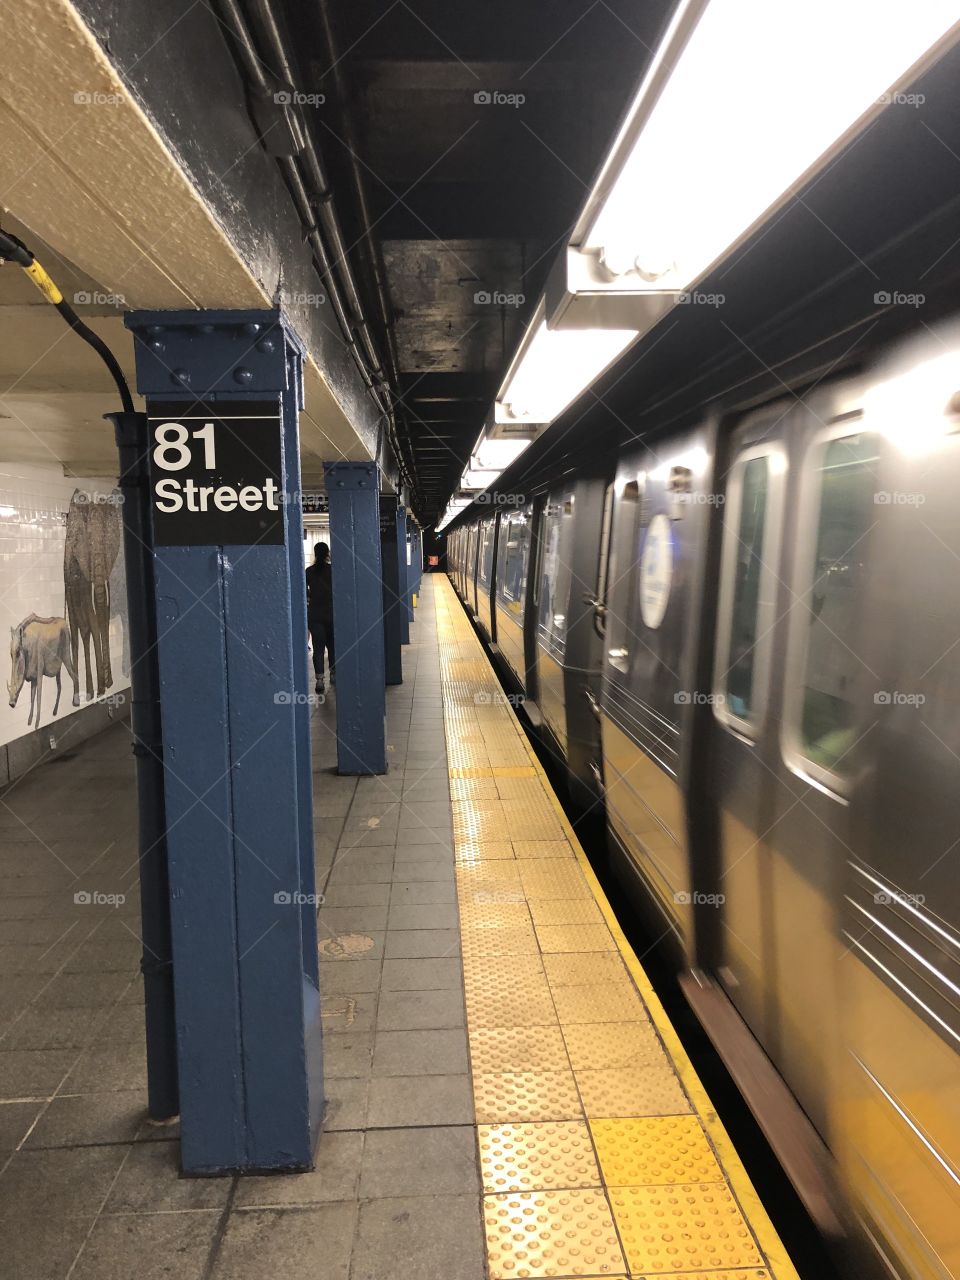 81 street nyc station 